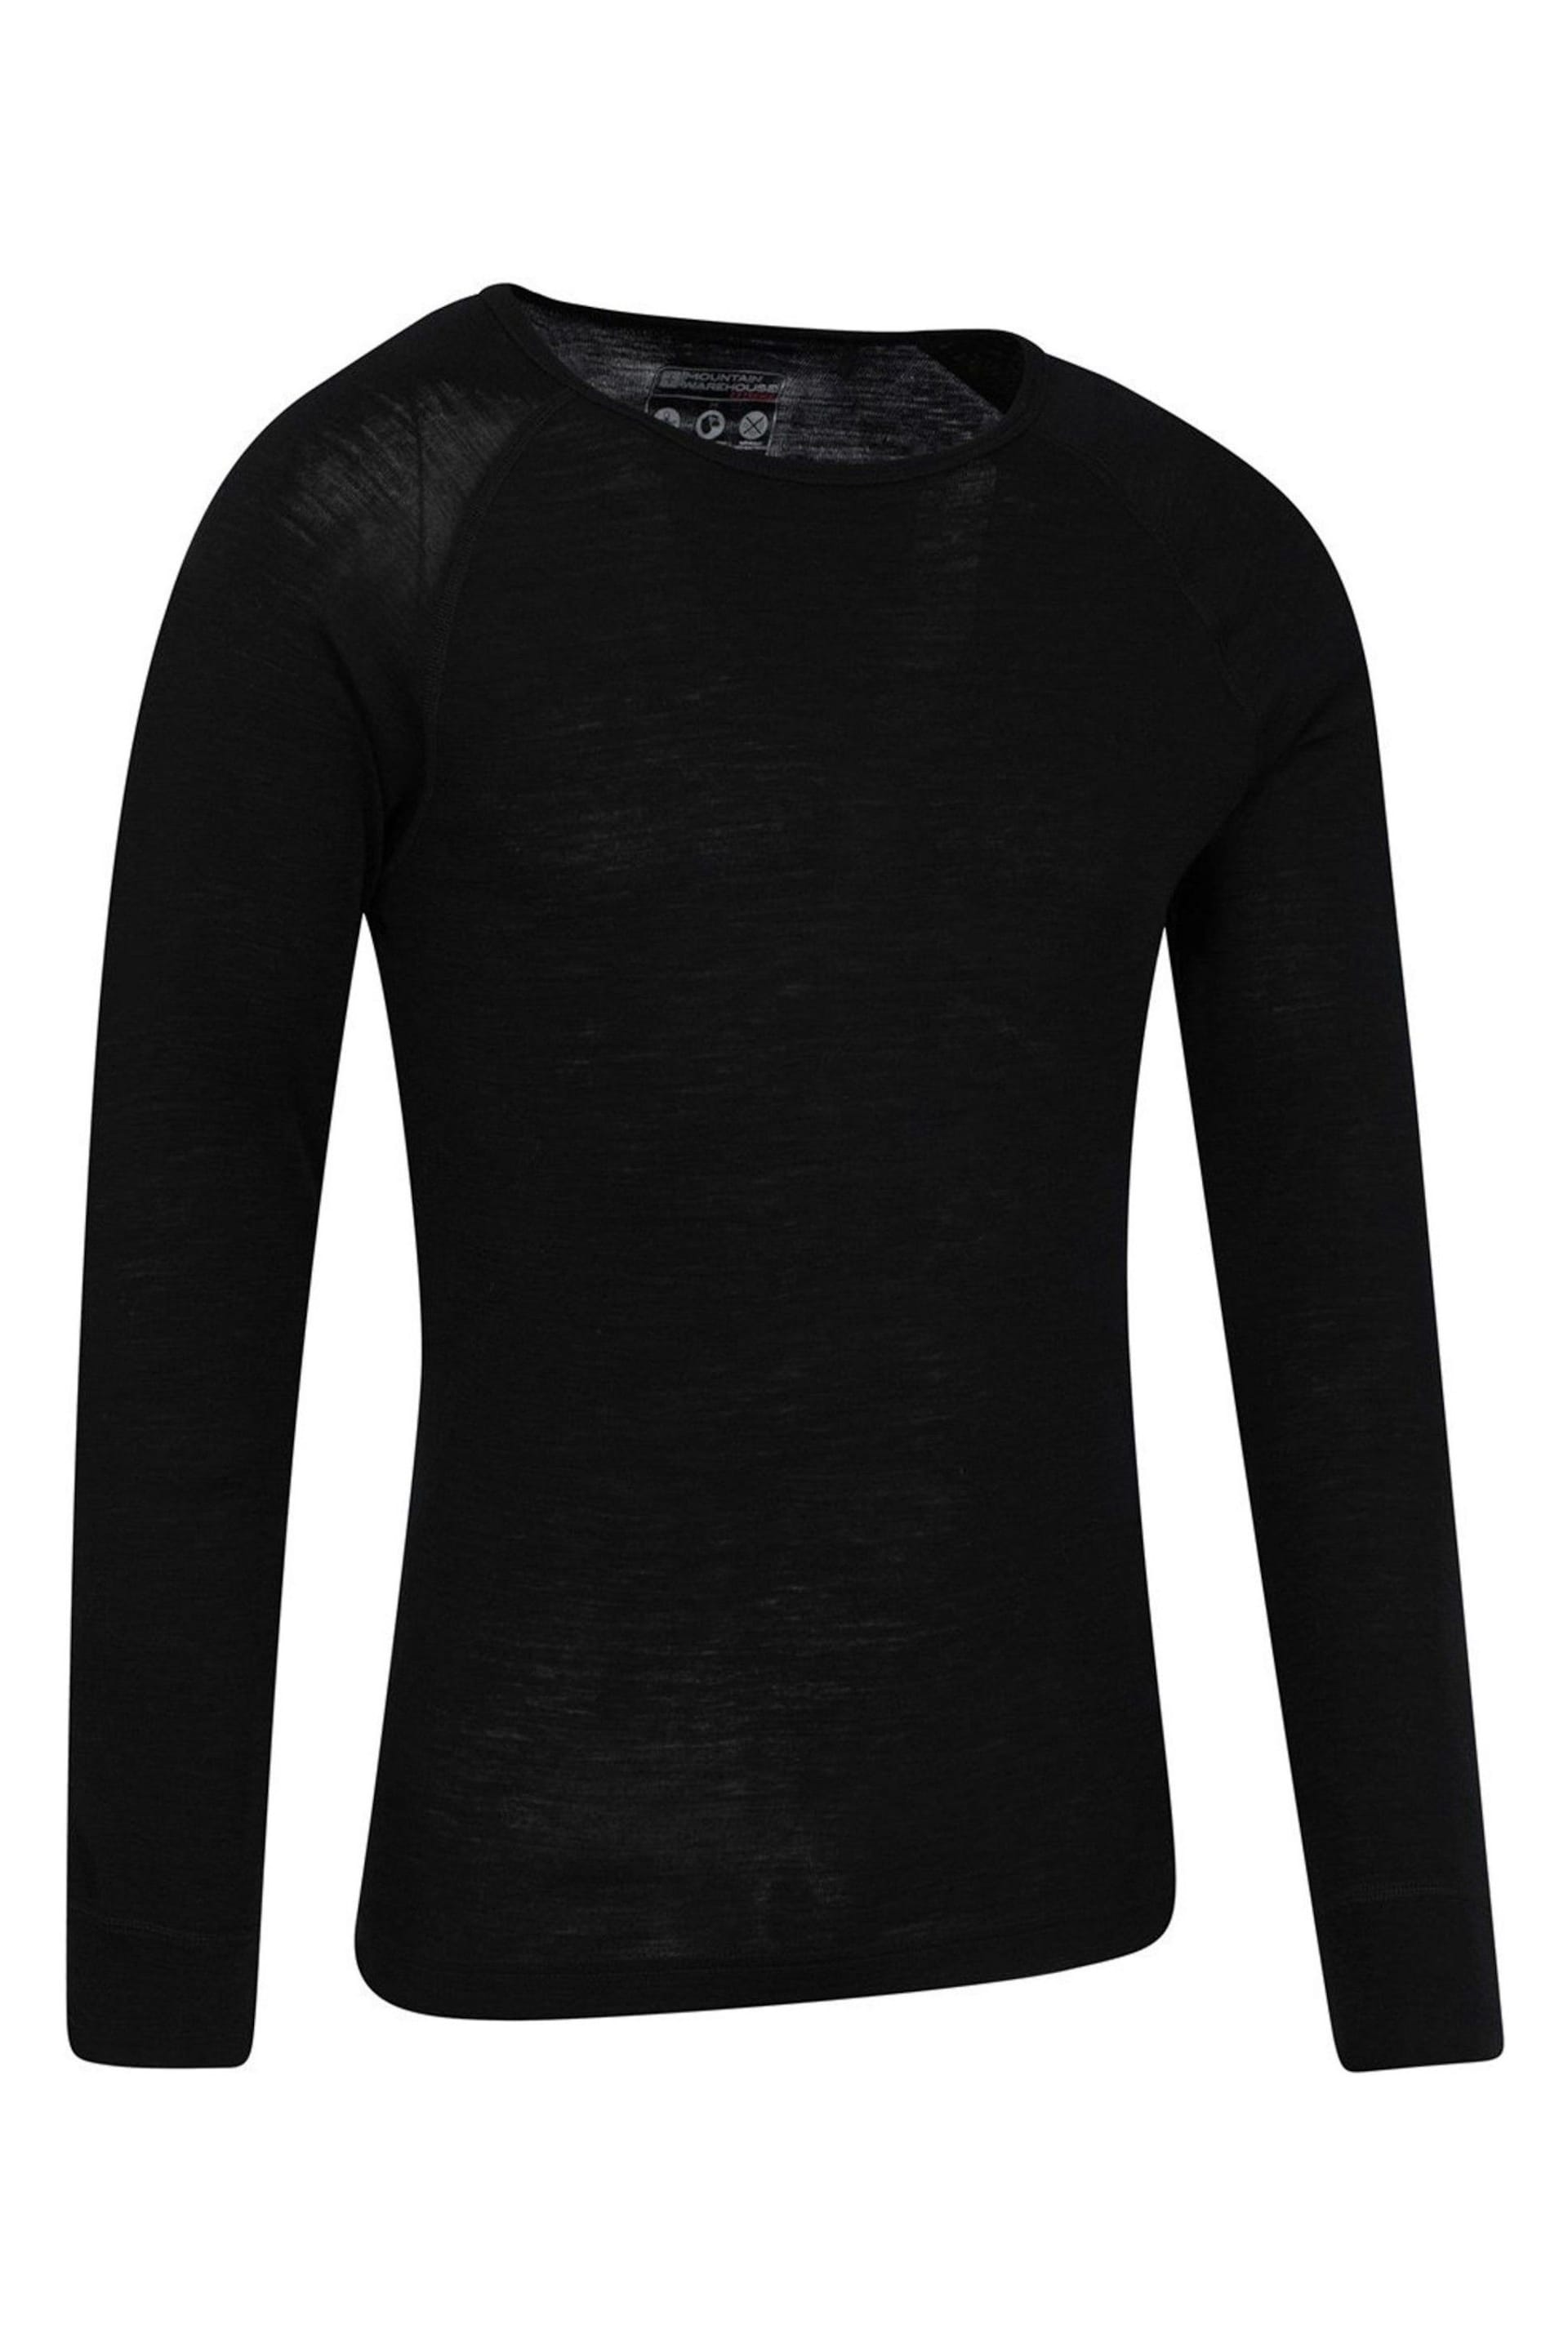 Mountain Warehouse Black Merino Long Sleeved Thermal Top - Mens - Image 2 of 3